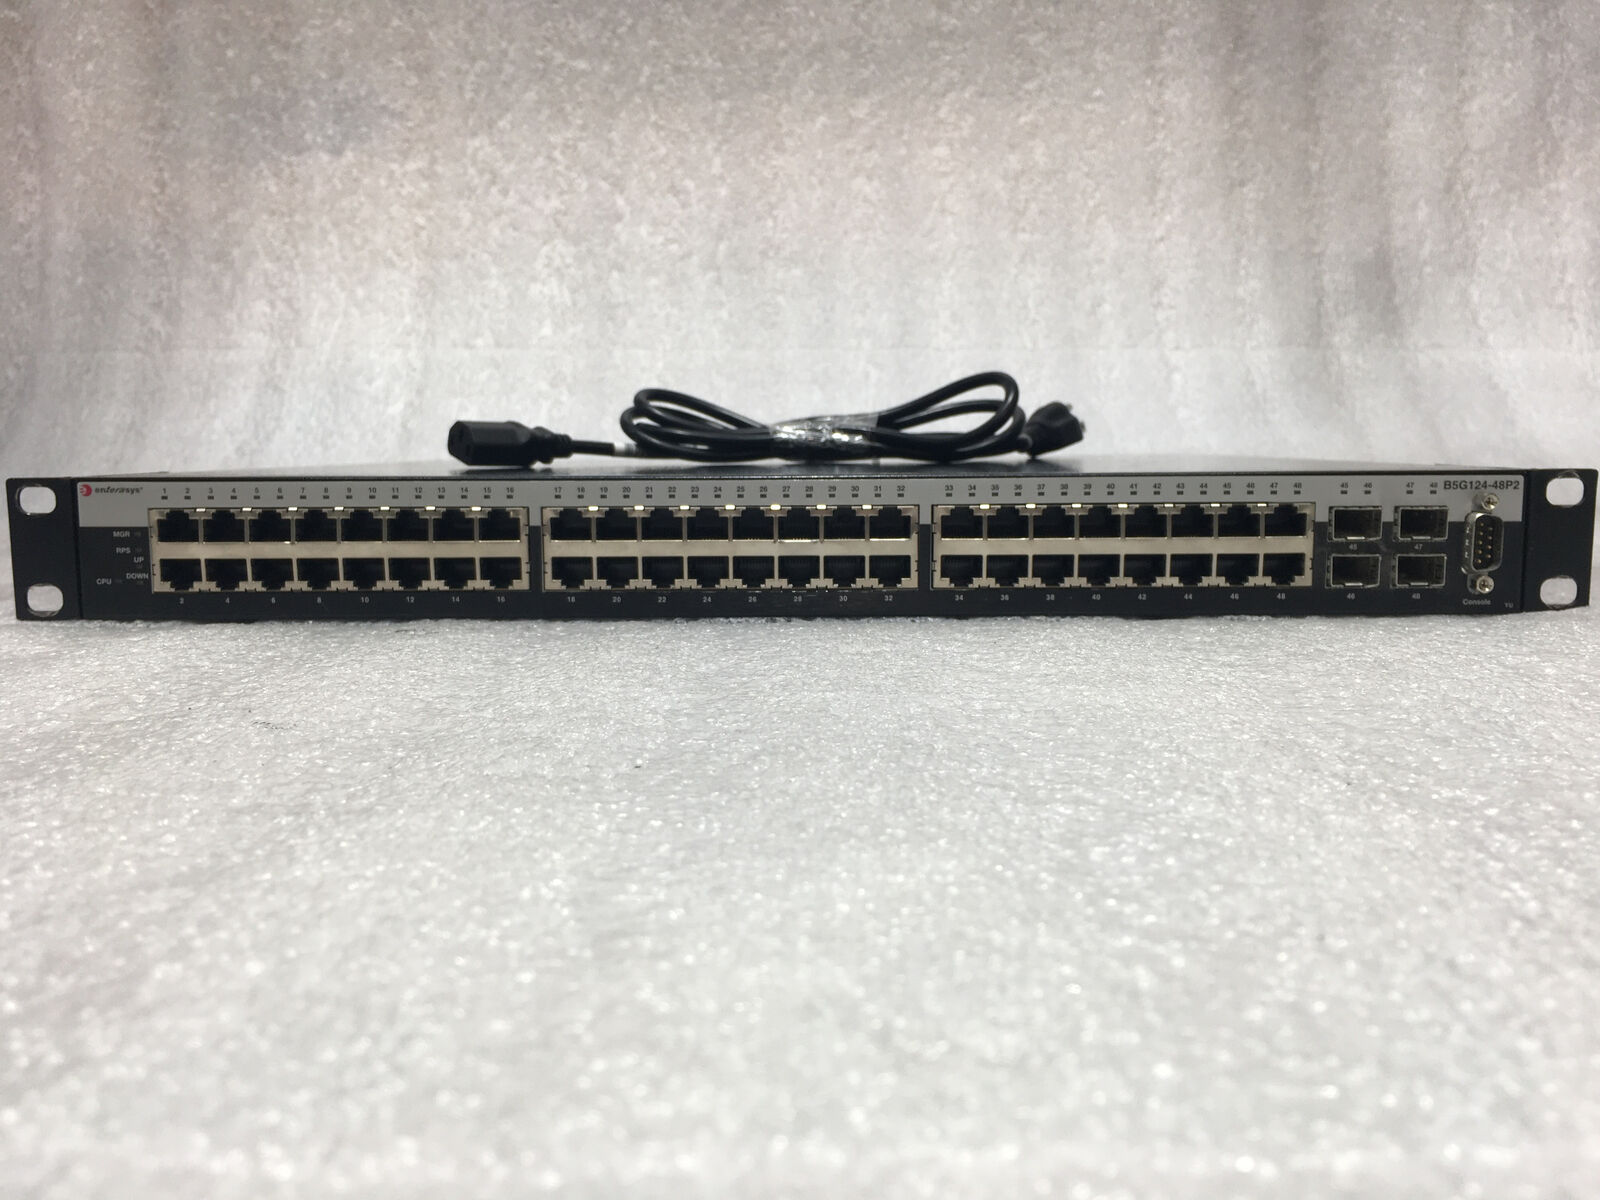 Enterasys/Extreme Networks B5G124-48P2 48-port PoE Gigabit Switch w/ 4x SFP